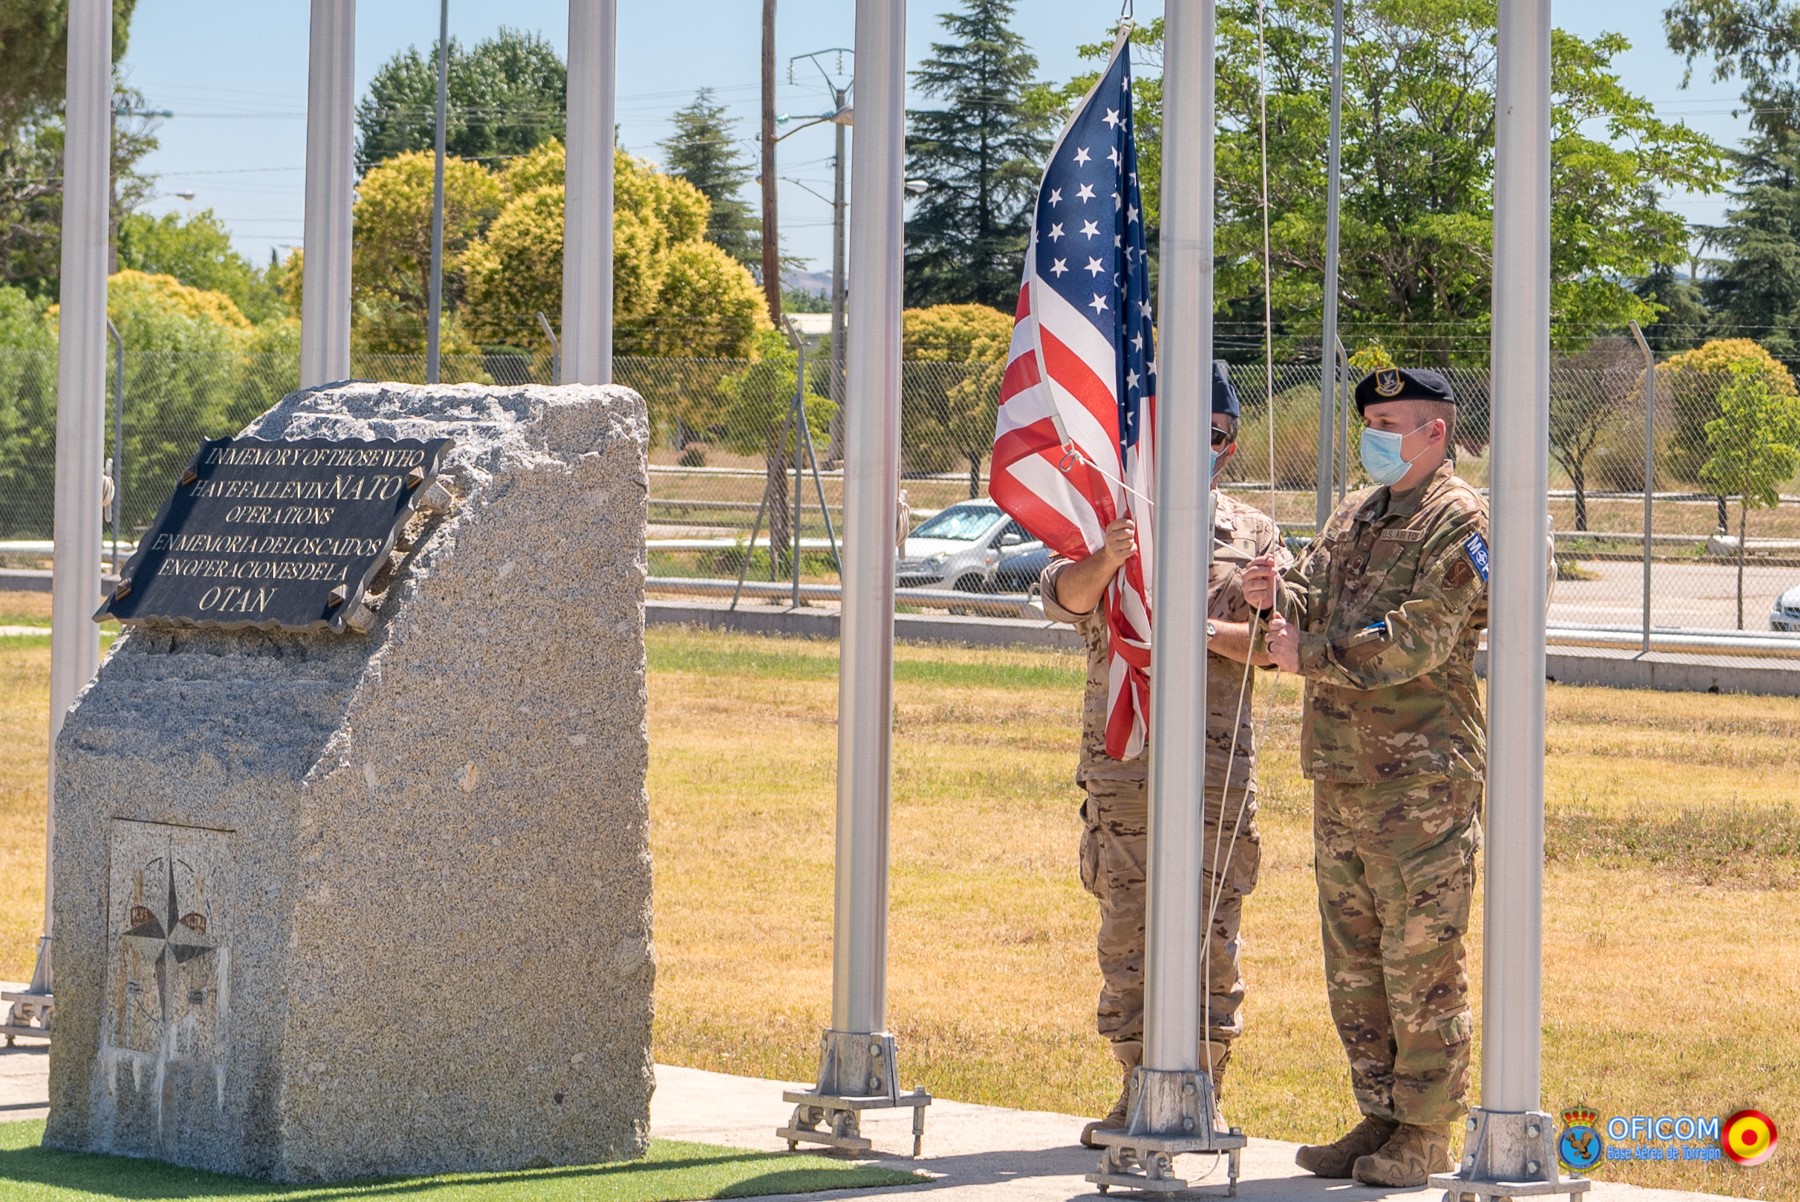 CAOC TJ raises U.S. flag on a ceremony  honoring U.S. Independence day